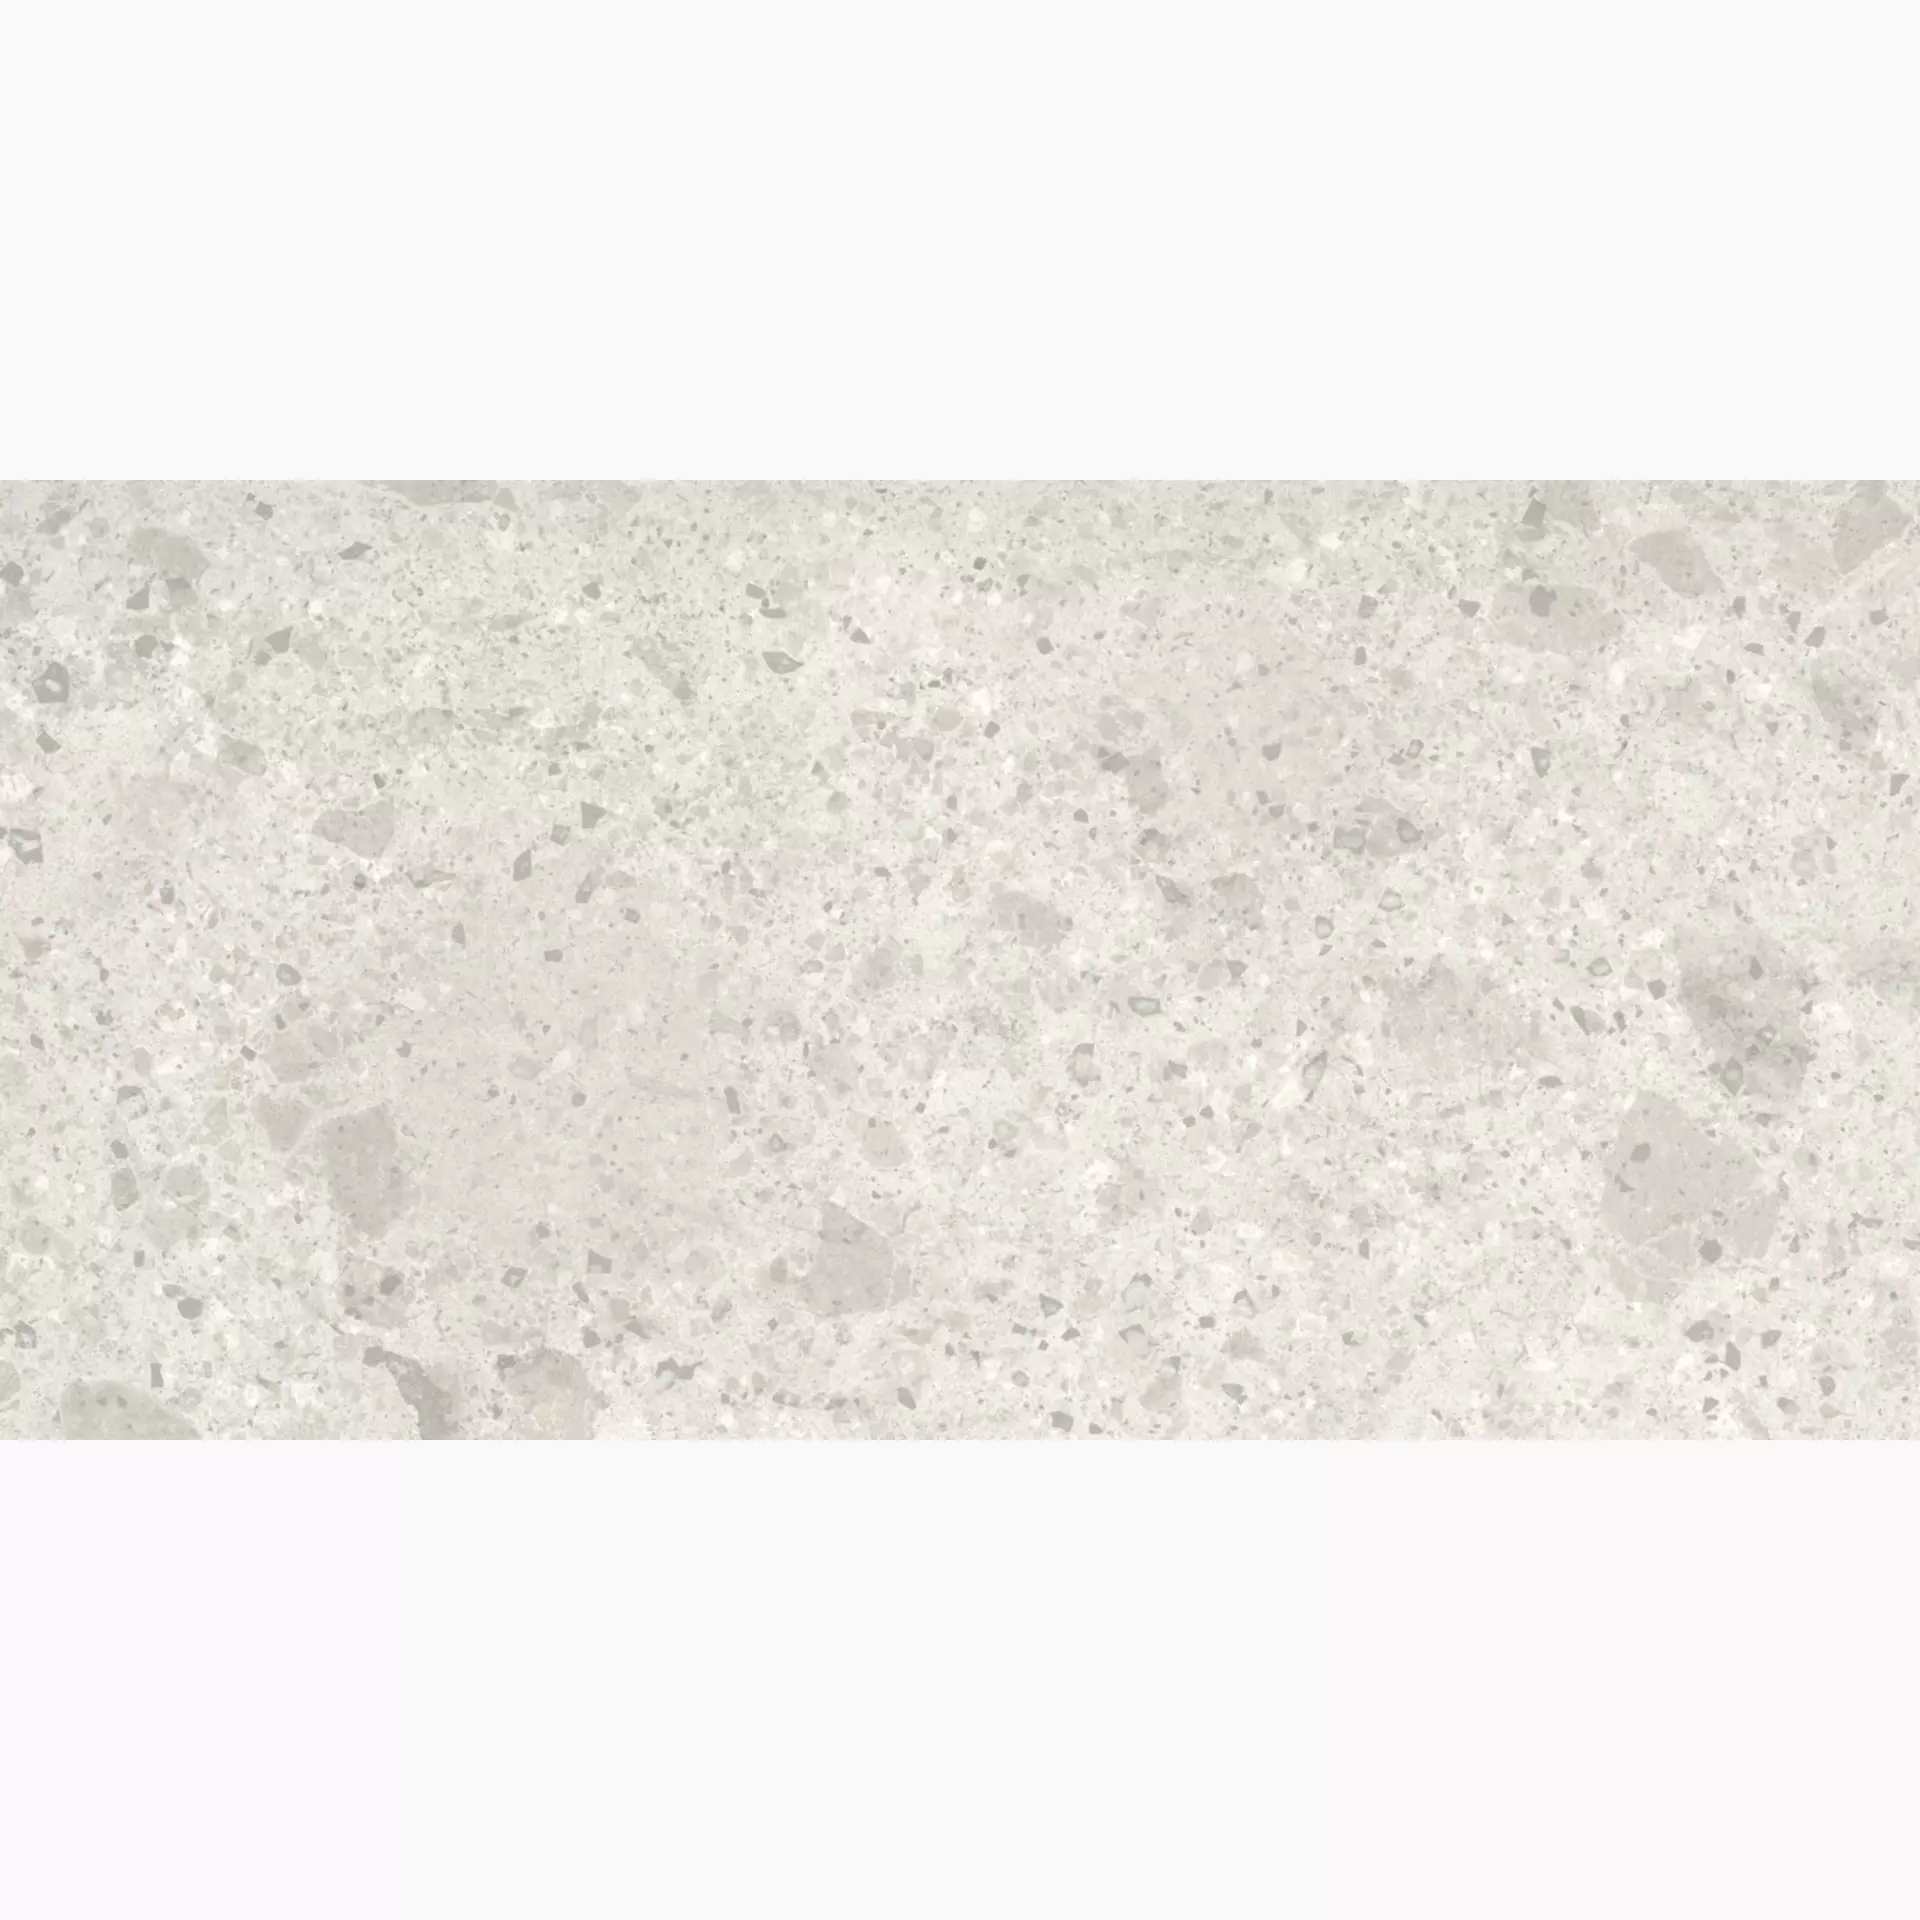 Ariostea Fragmenta Full Body Bianco Greco Soft P612616 60x120cm 10mm